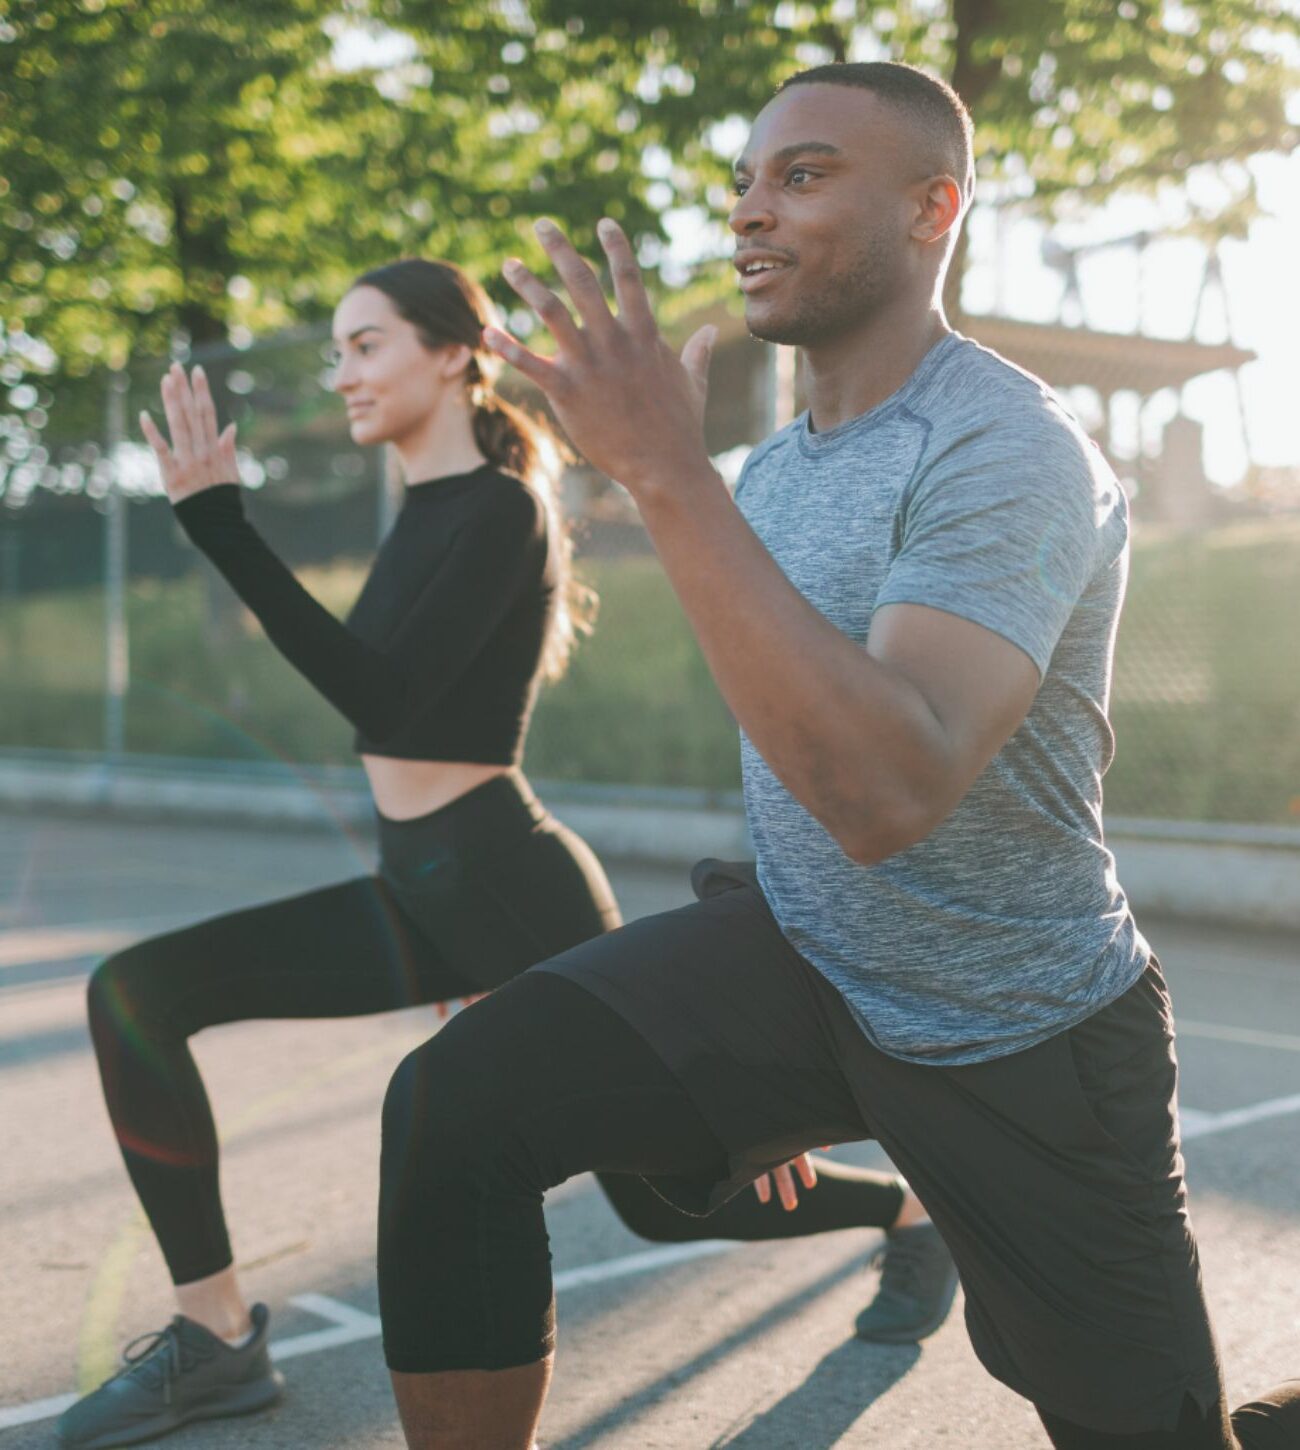 Photo of a multi-racial man and woman enjoying an outdoor workout.